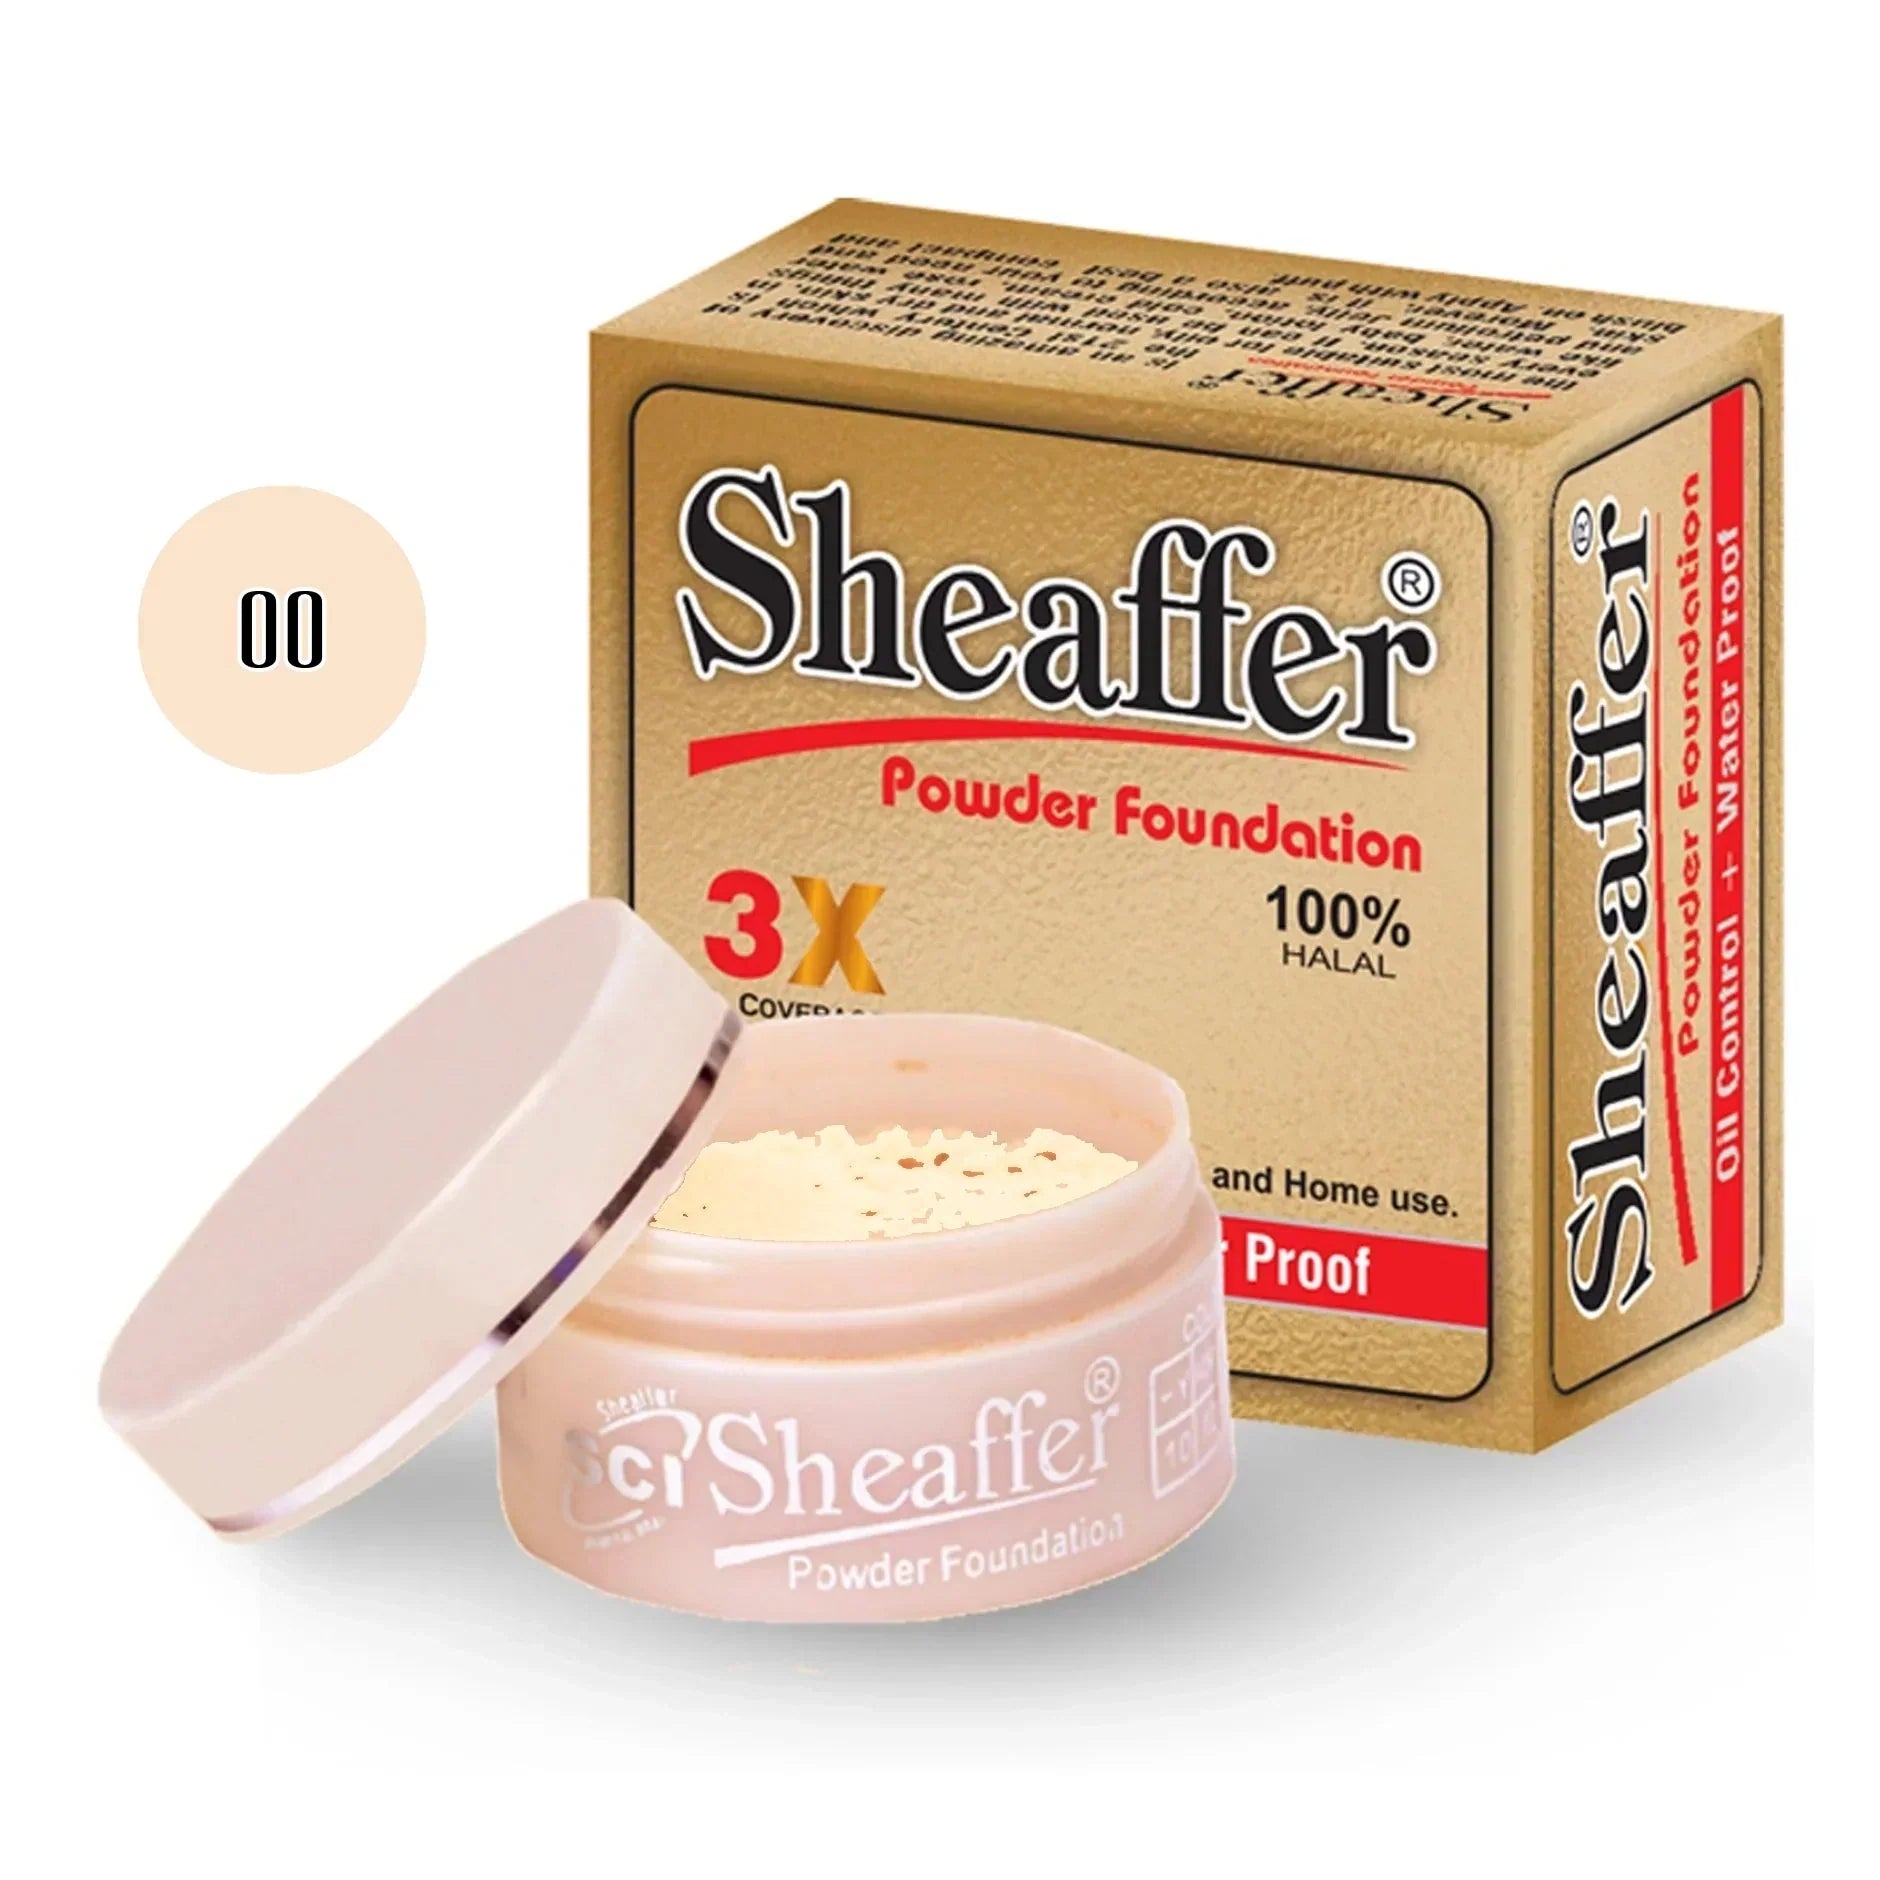 Sheaffer Powder Foundation Base P3 Shade - Retailershop - Online Shopping Center